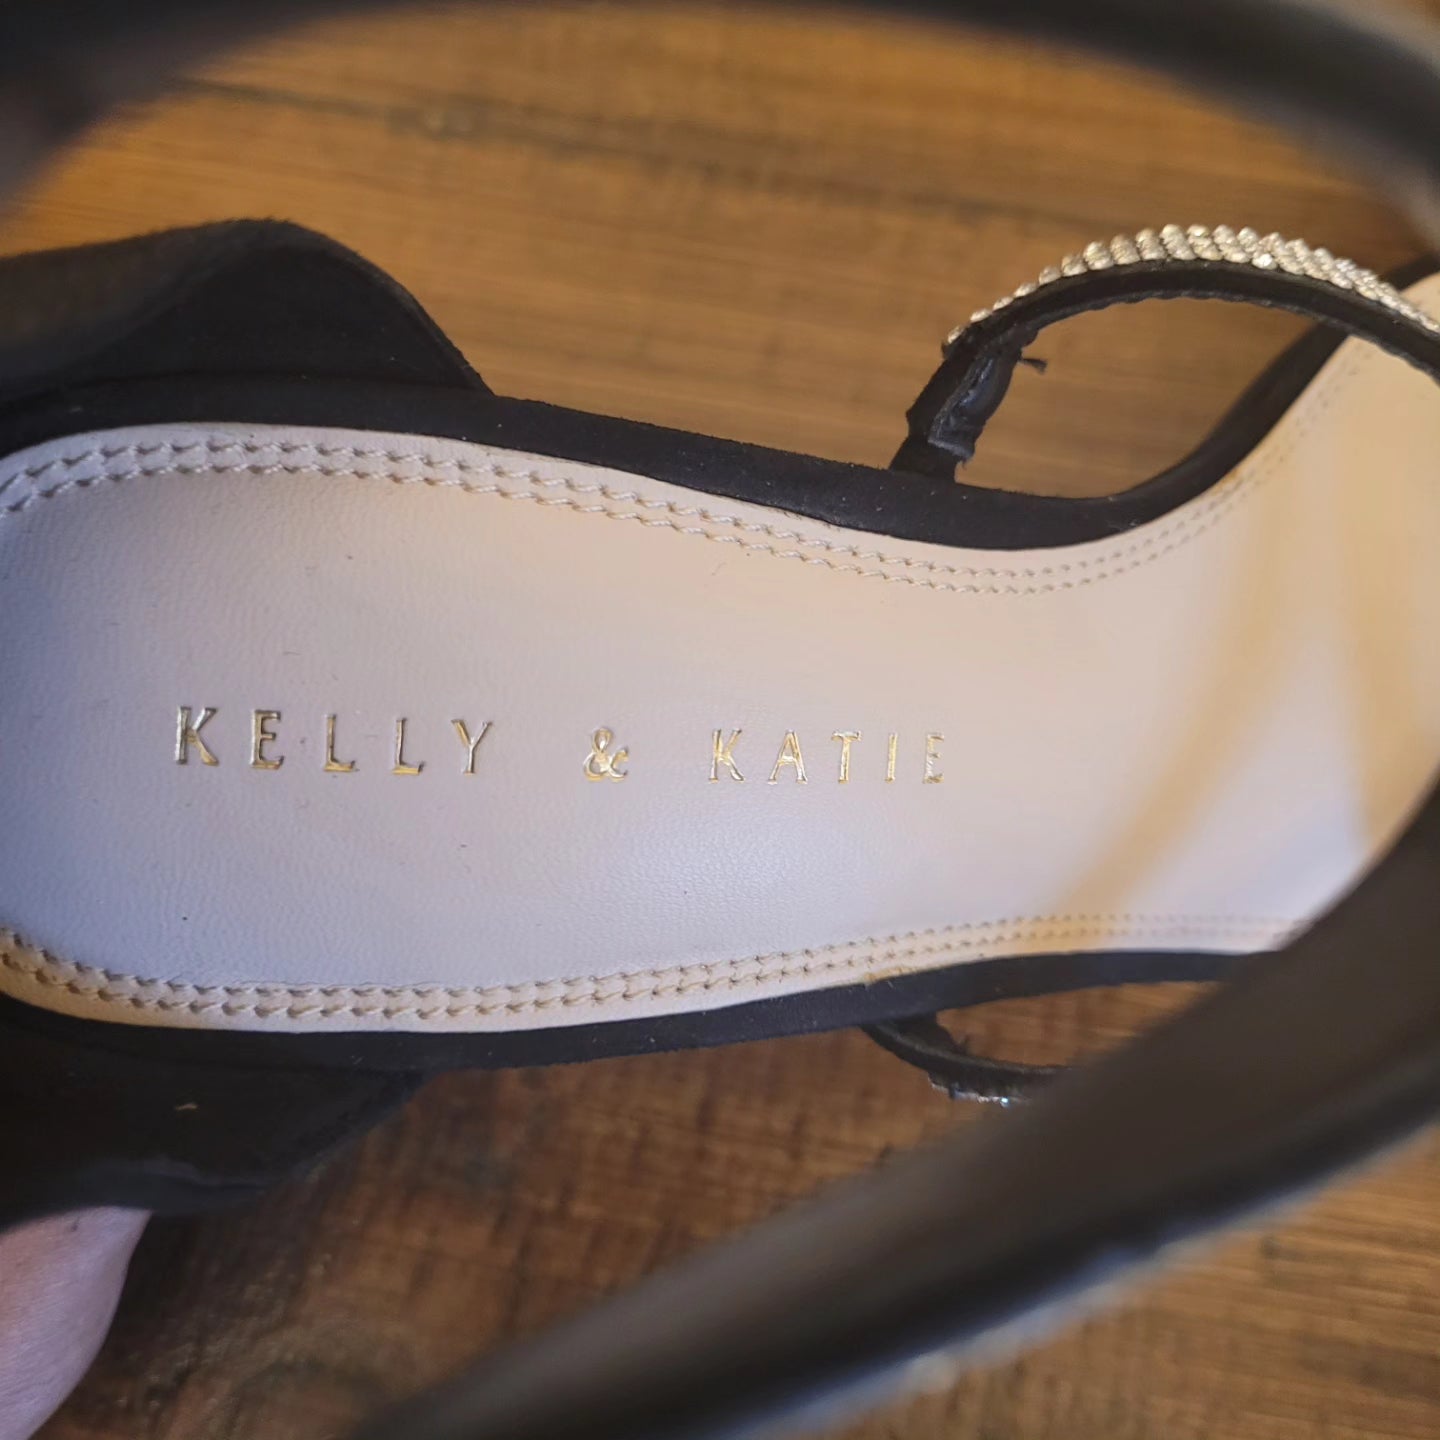 Kelly and Katie black heels with silver rhinestones